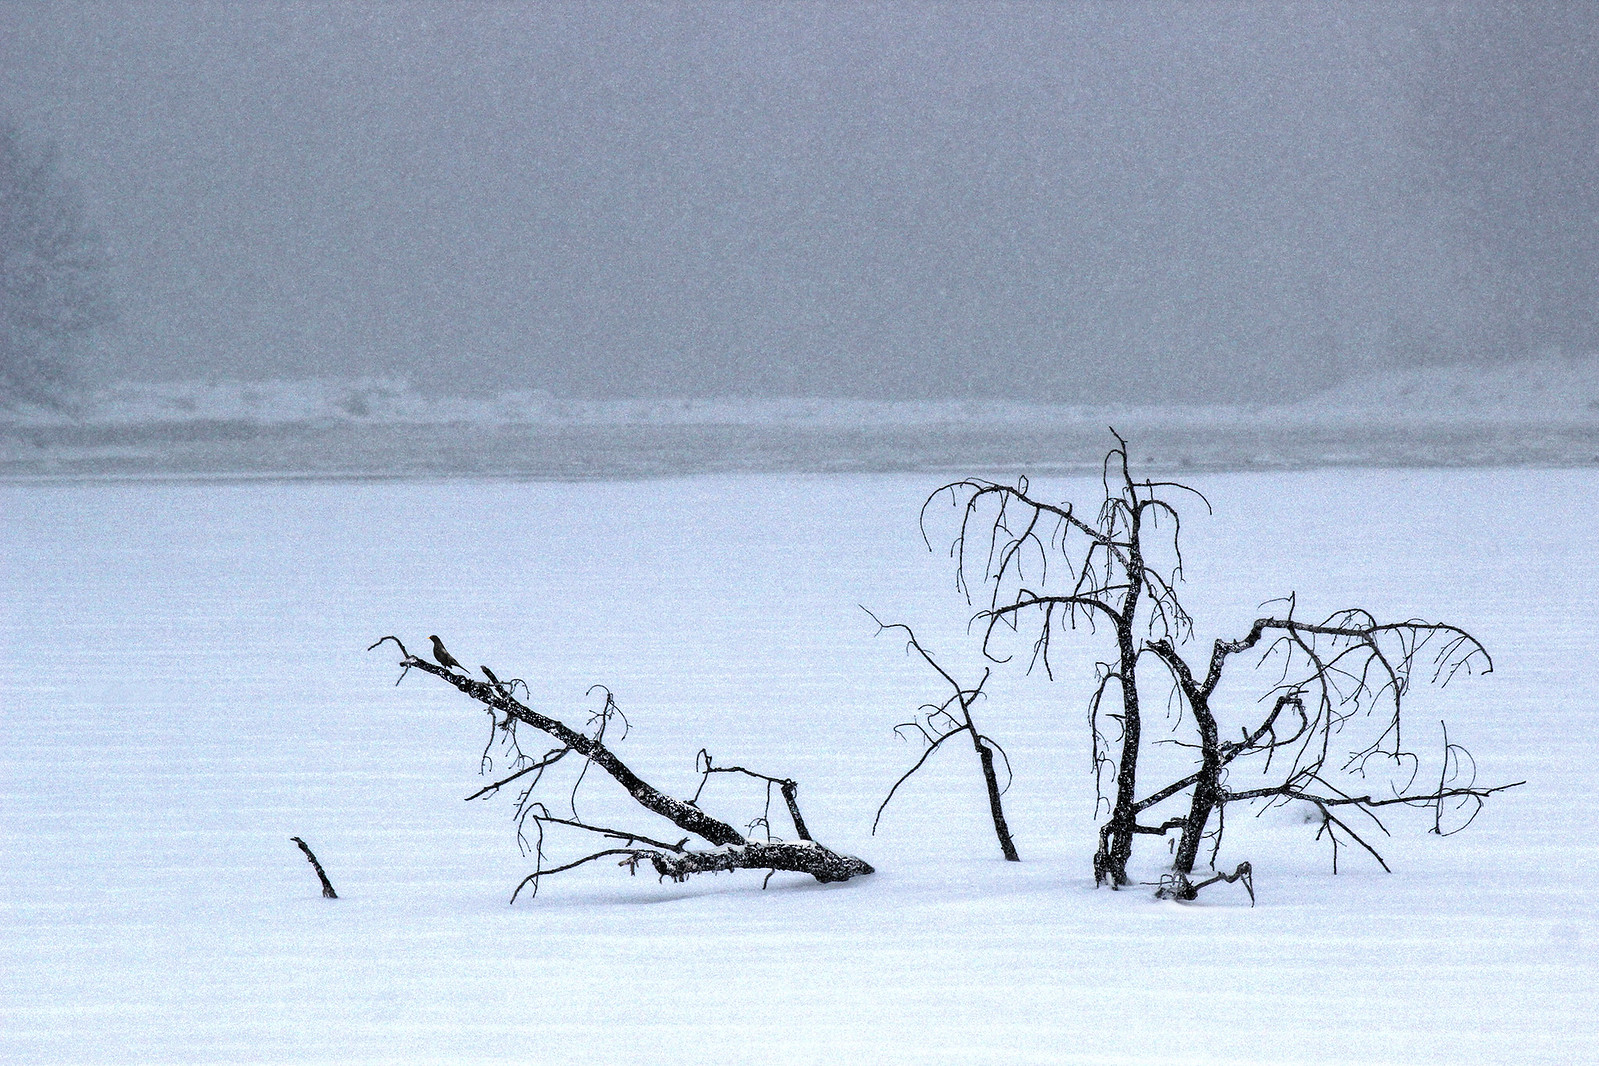 Dead tree in snowfall